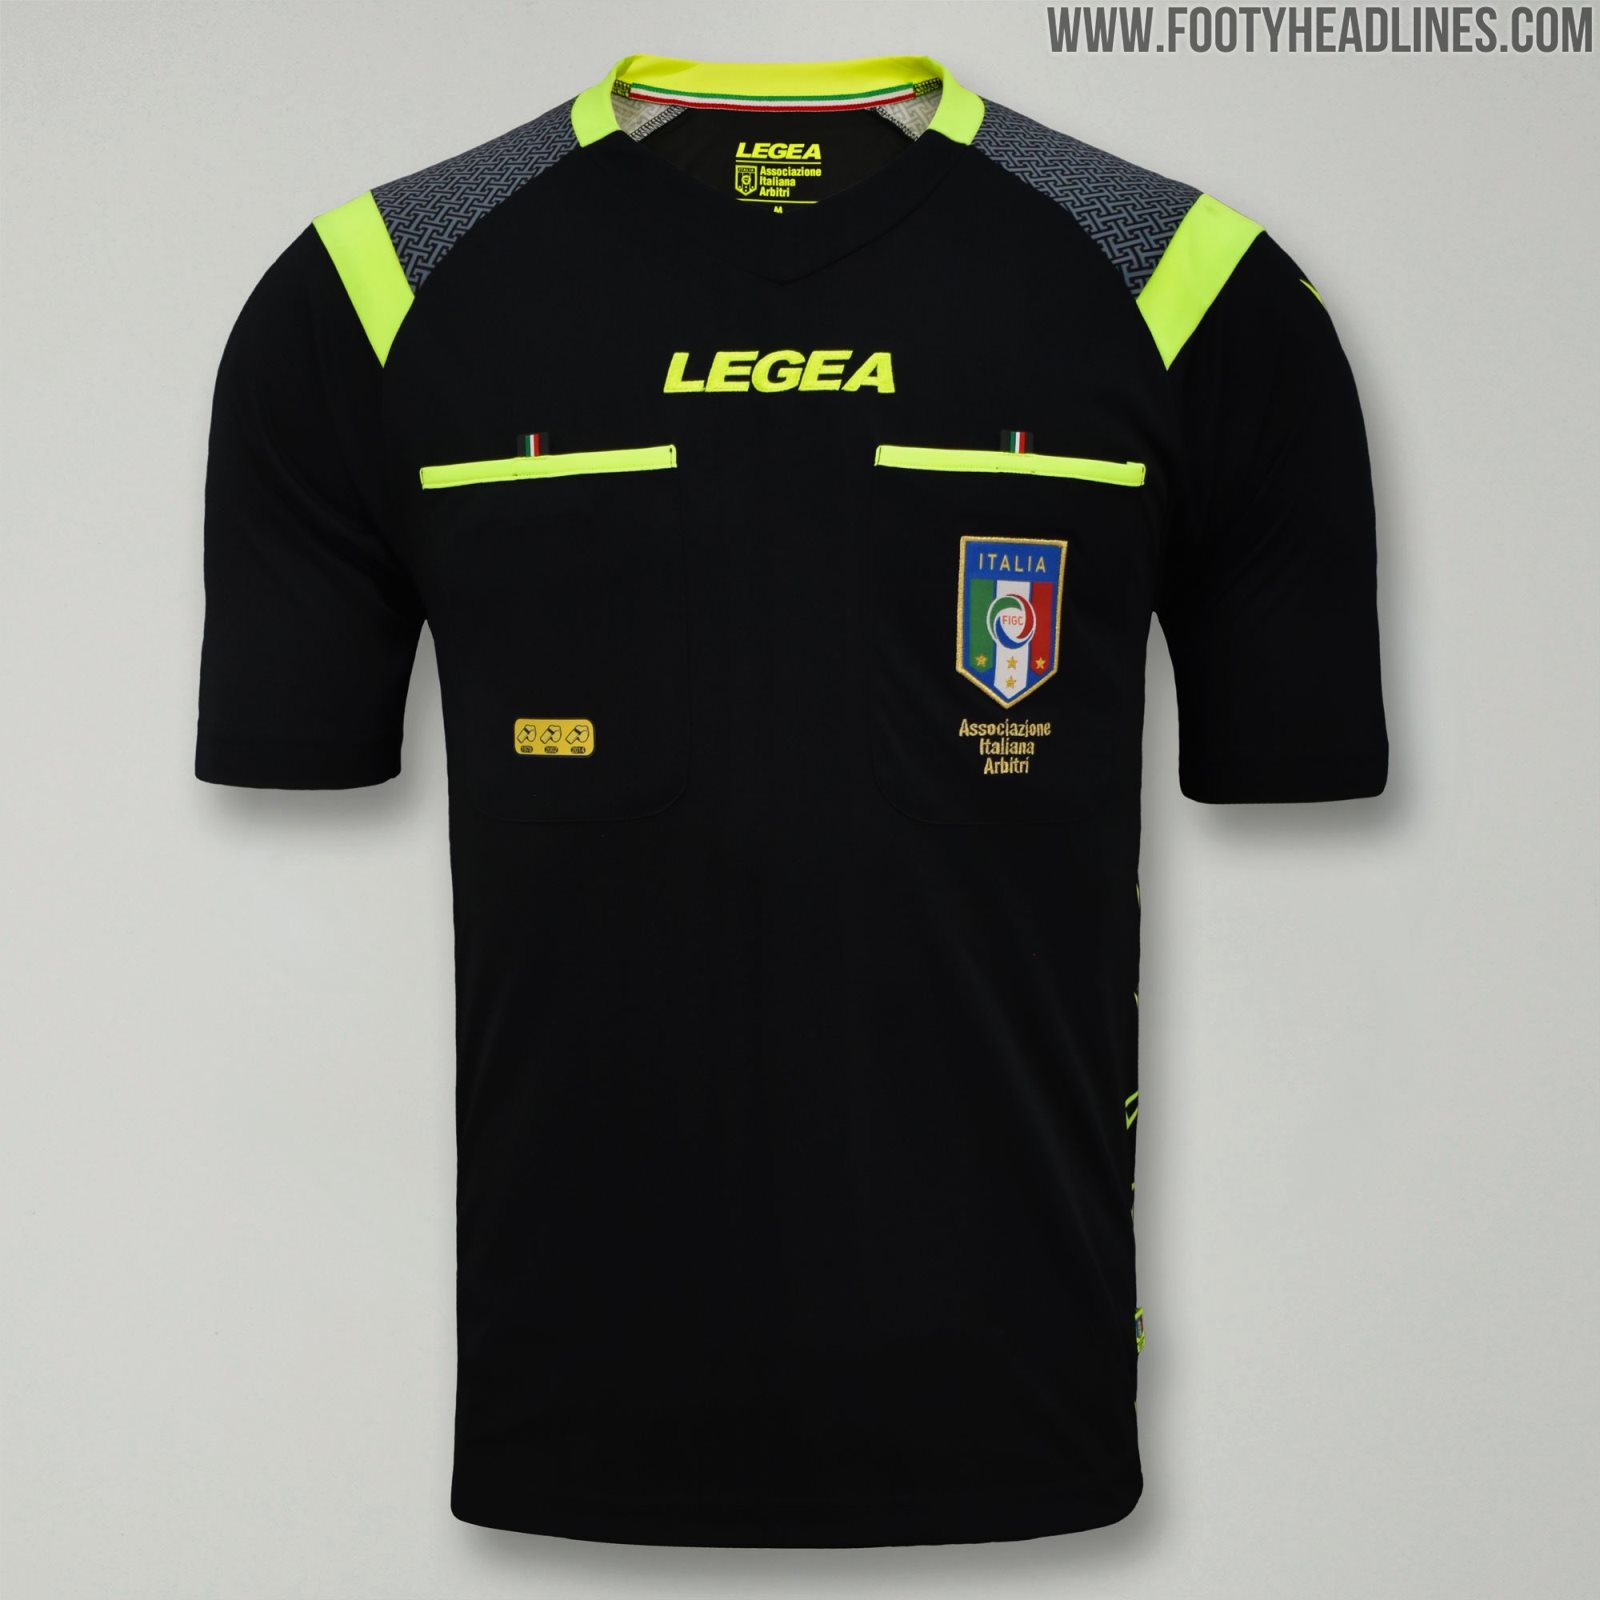 No More Diadora After 26 Years - Legea Serie A 19-20 Referee Kits ...